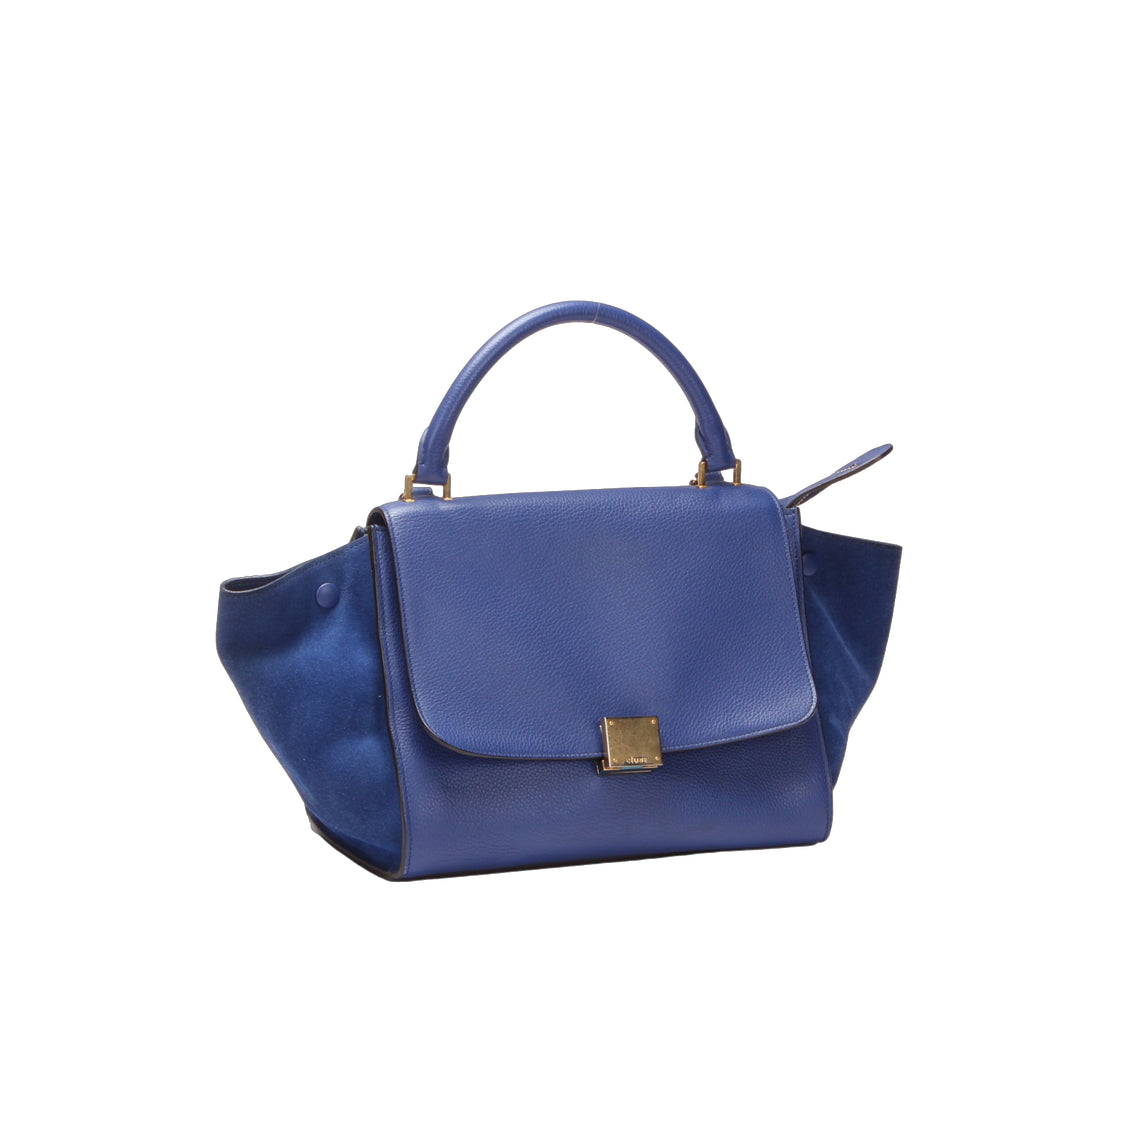 Celine Leather & Suede Trapeze Handbag Leather Handbag in Good condition